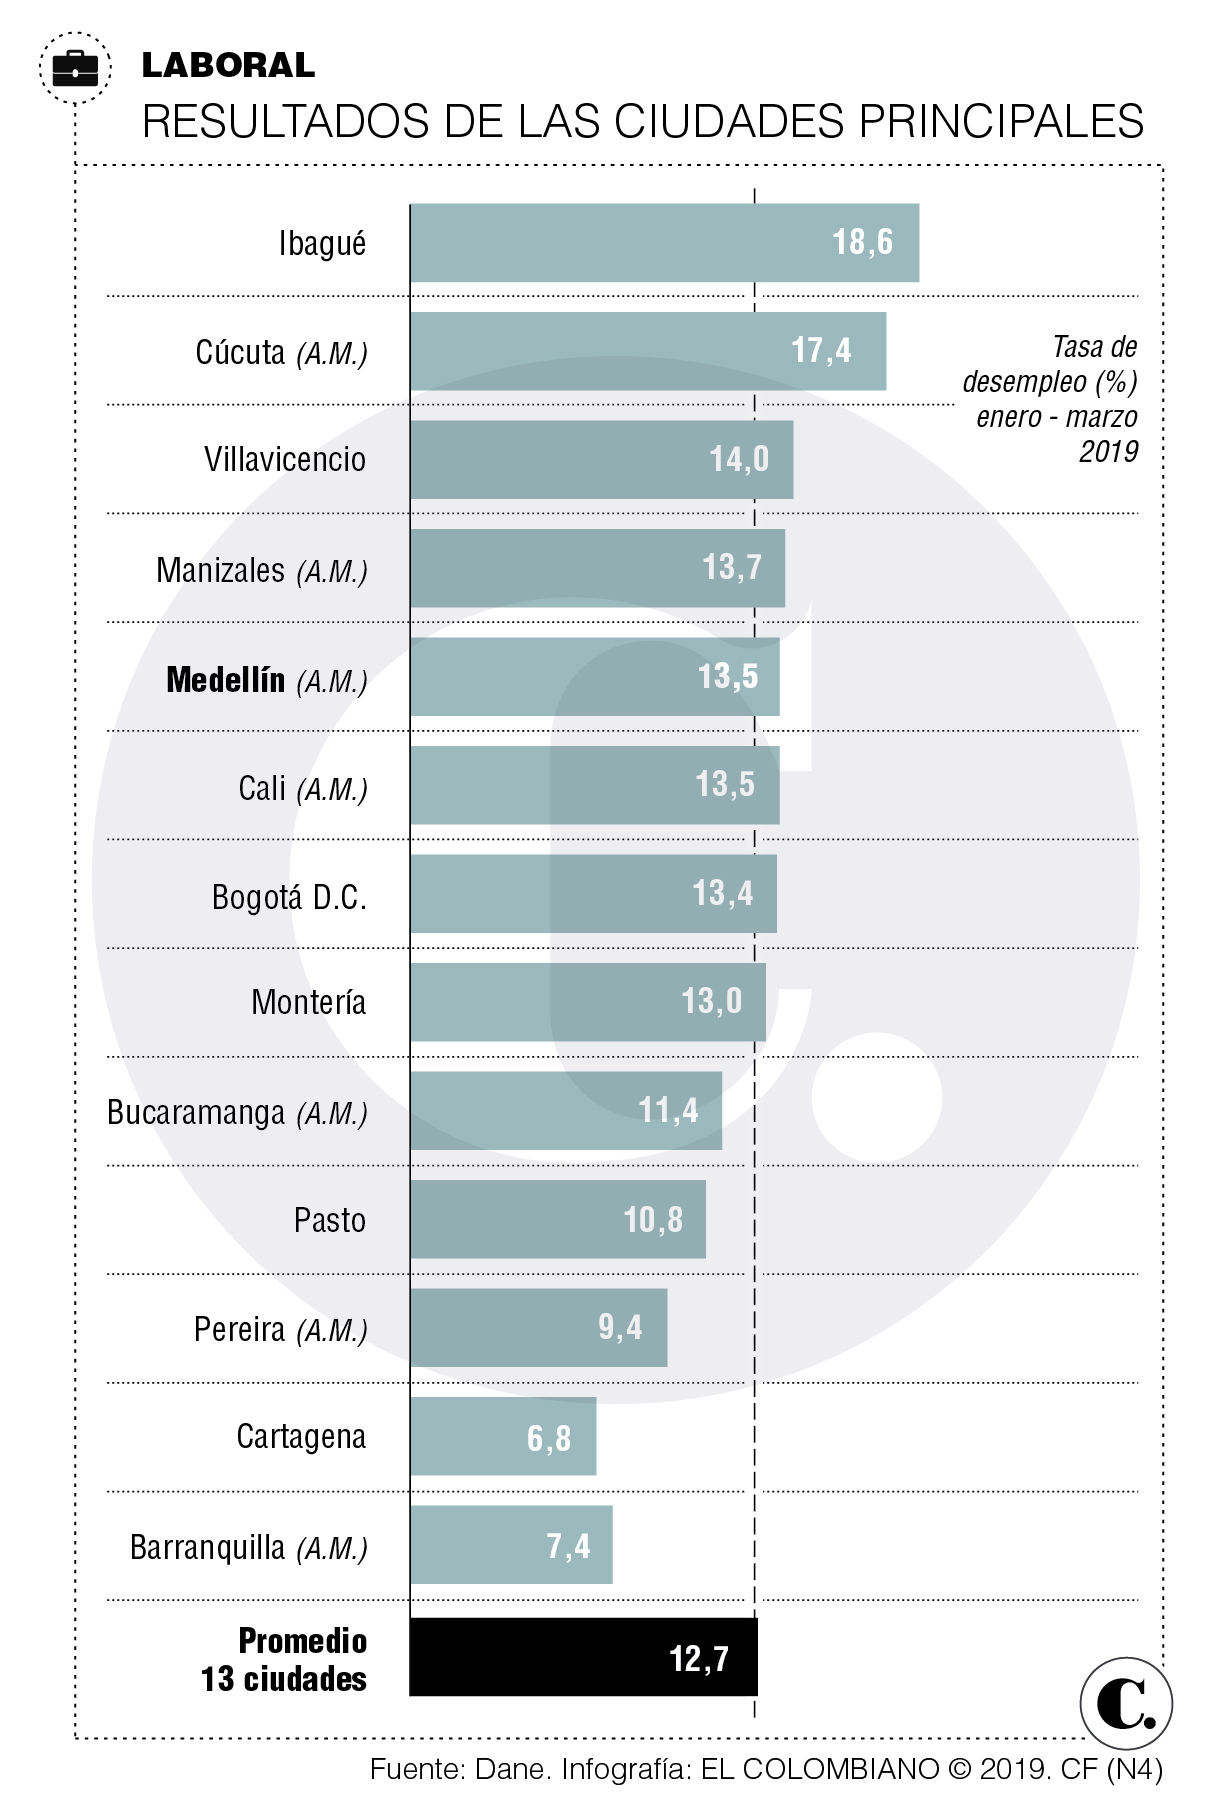 Tasa de desempleo en Medellín se ubicó en 13,5 %